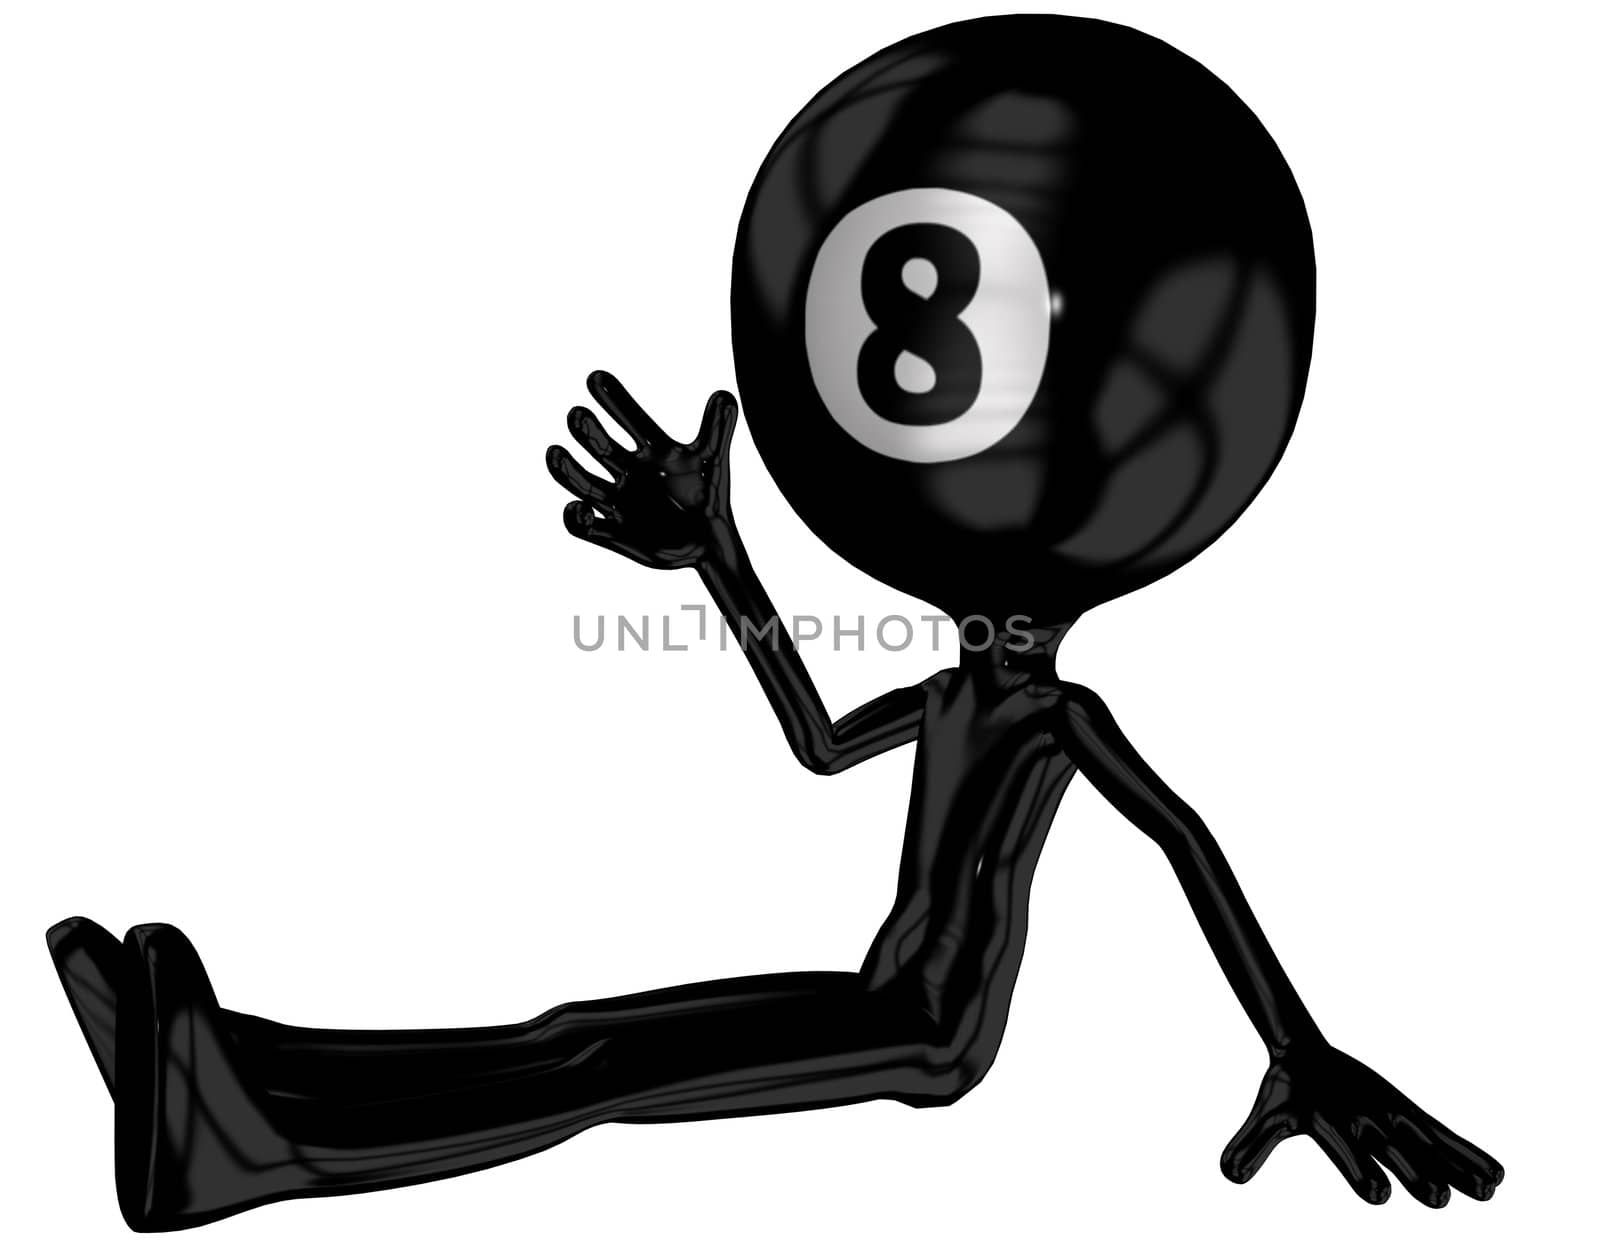 Michael billiard cartoon character by Wampa